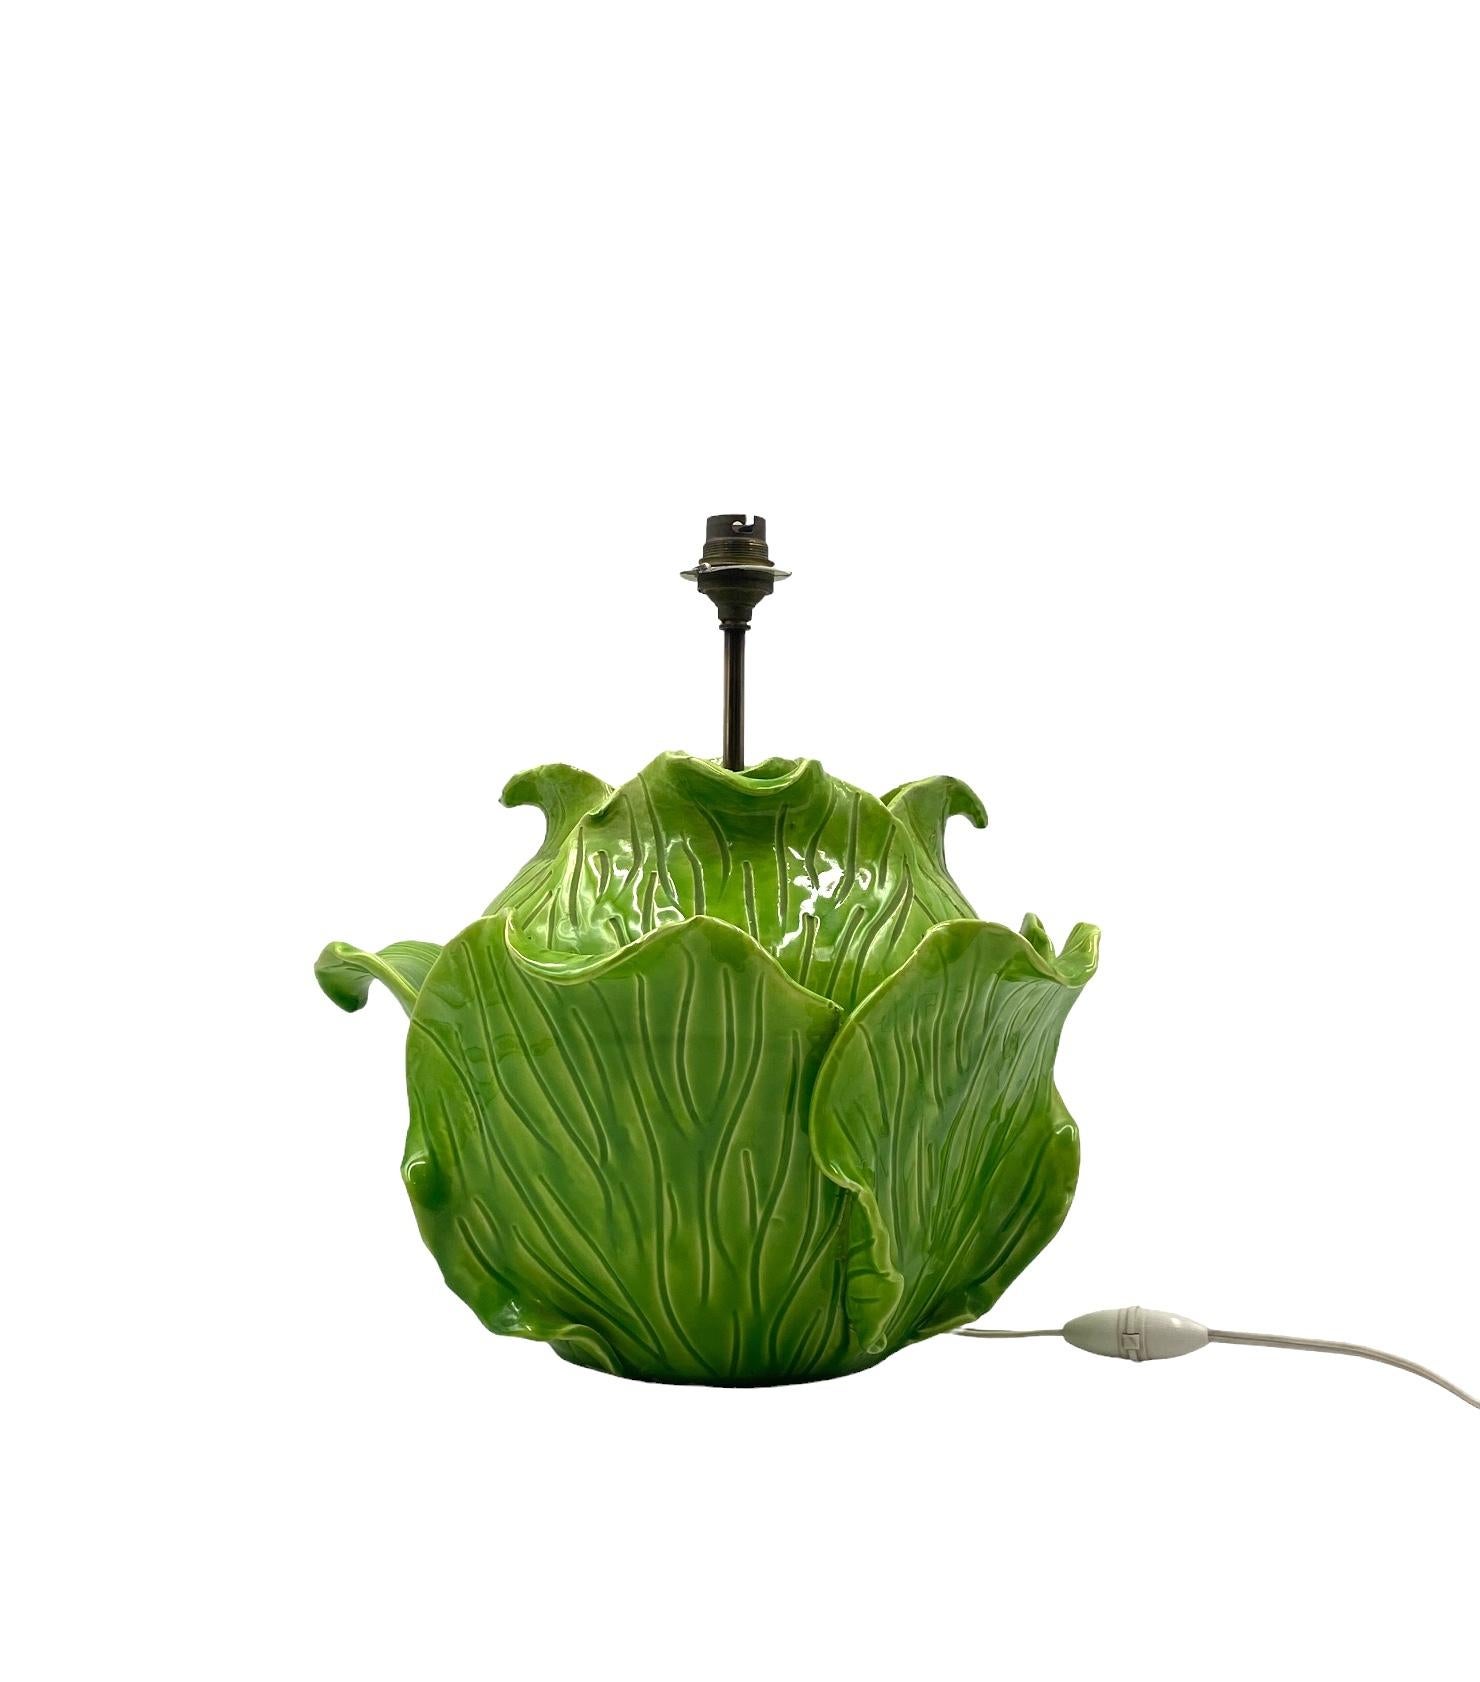 Jean Roger, Life Size Ceramic Lettuce Lamp, Paris France 1950s For Sale 10